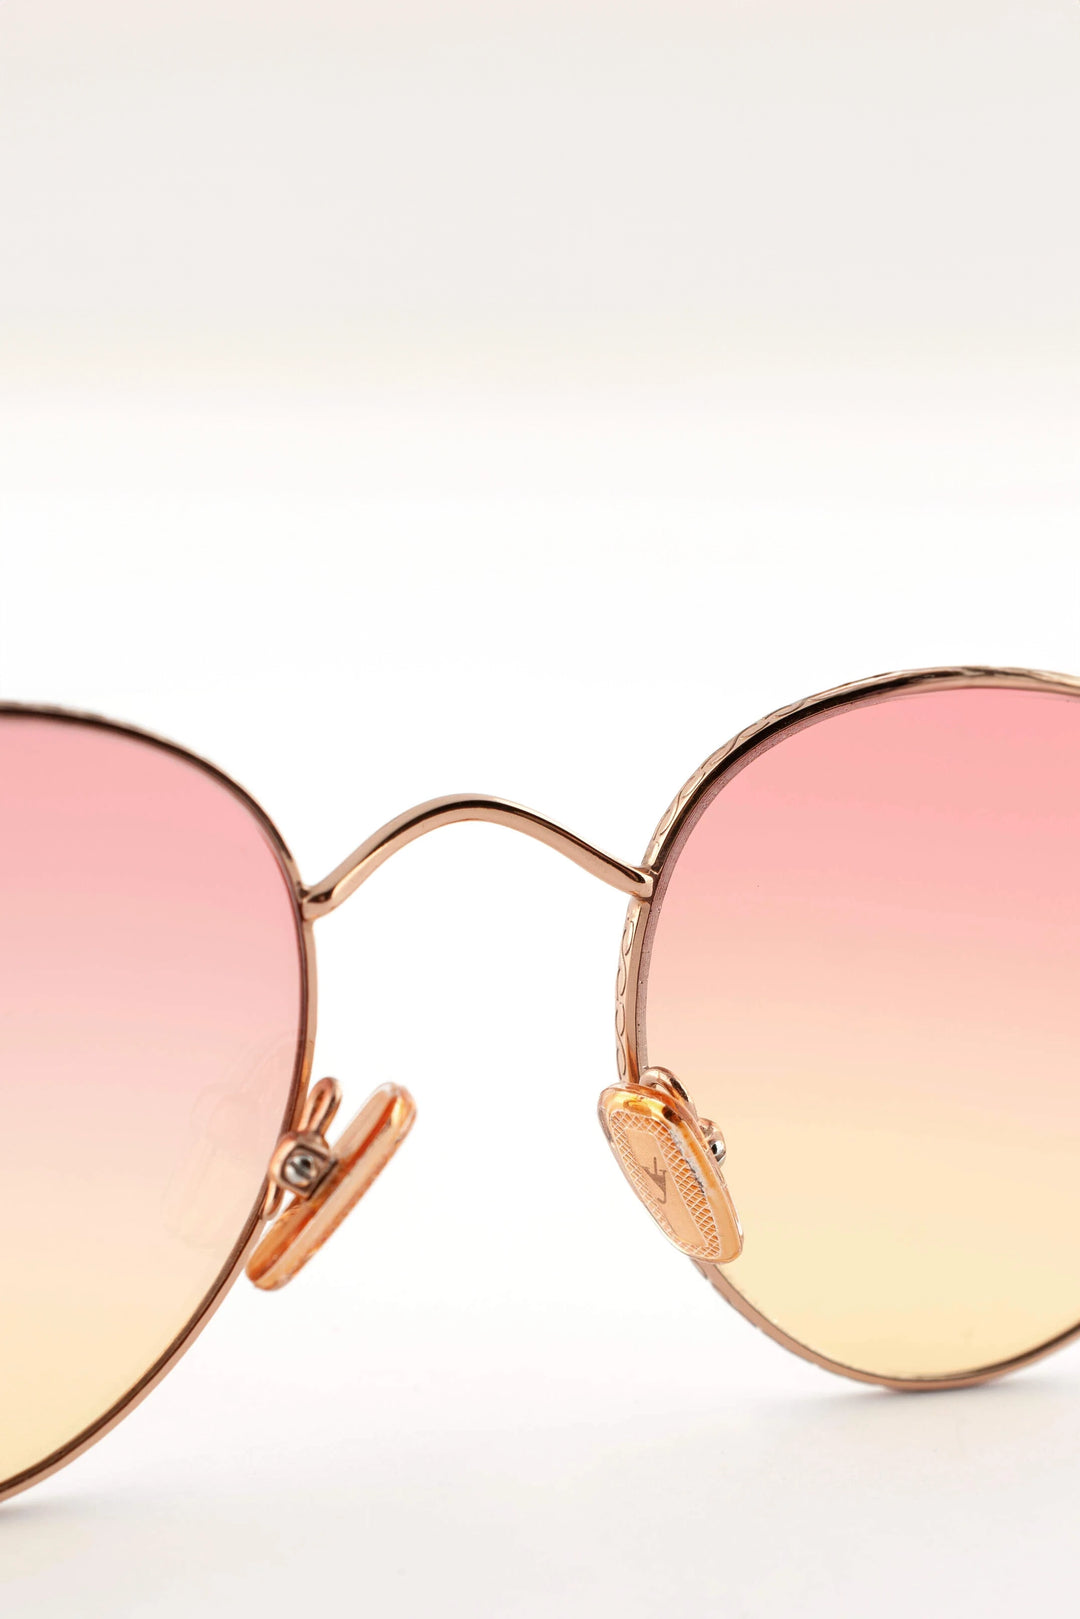 Jockey Sunglasses - Rose Gold / Pink Gradient